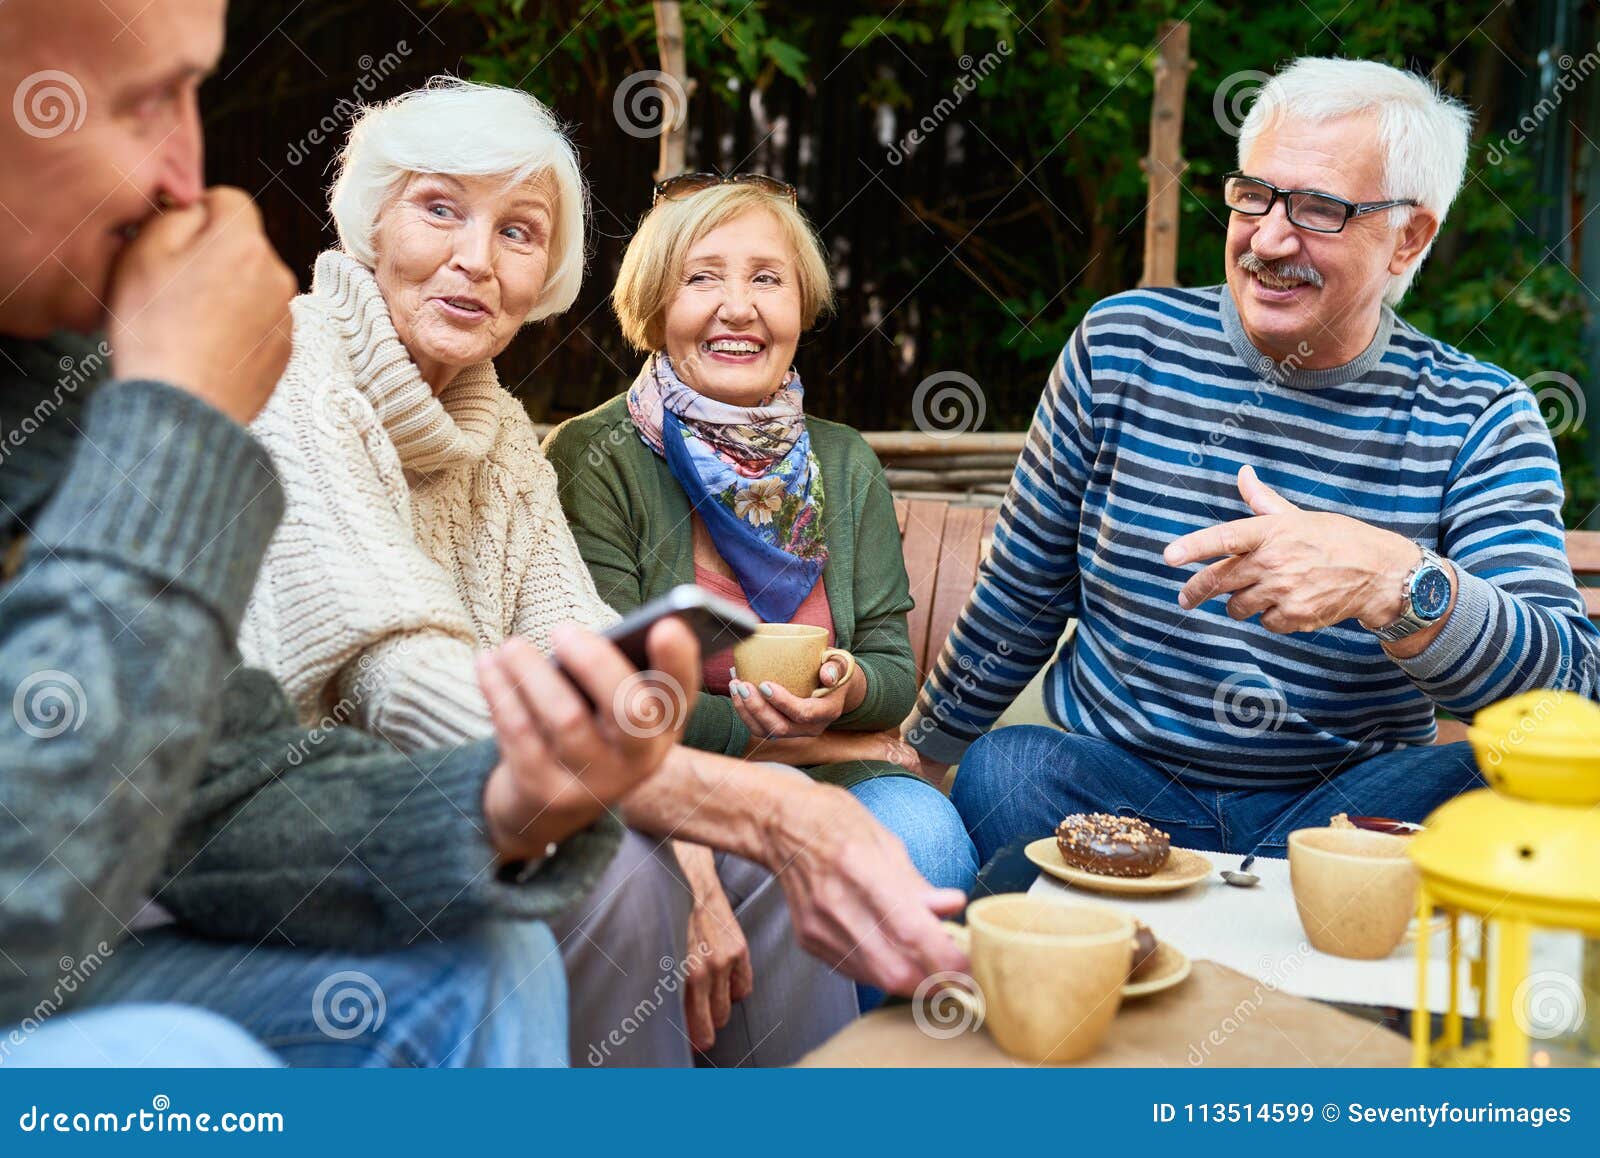 senior friends enjoying time outdoors